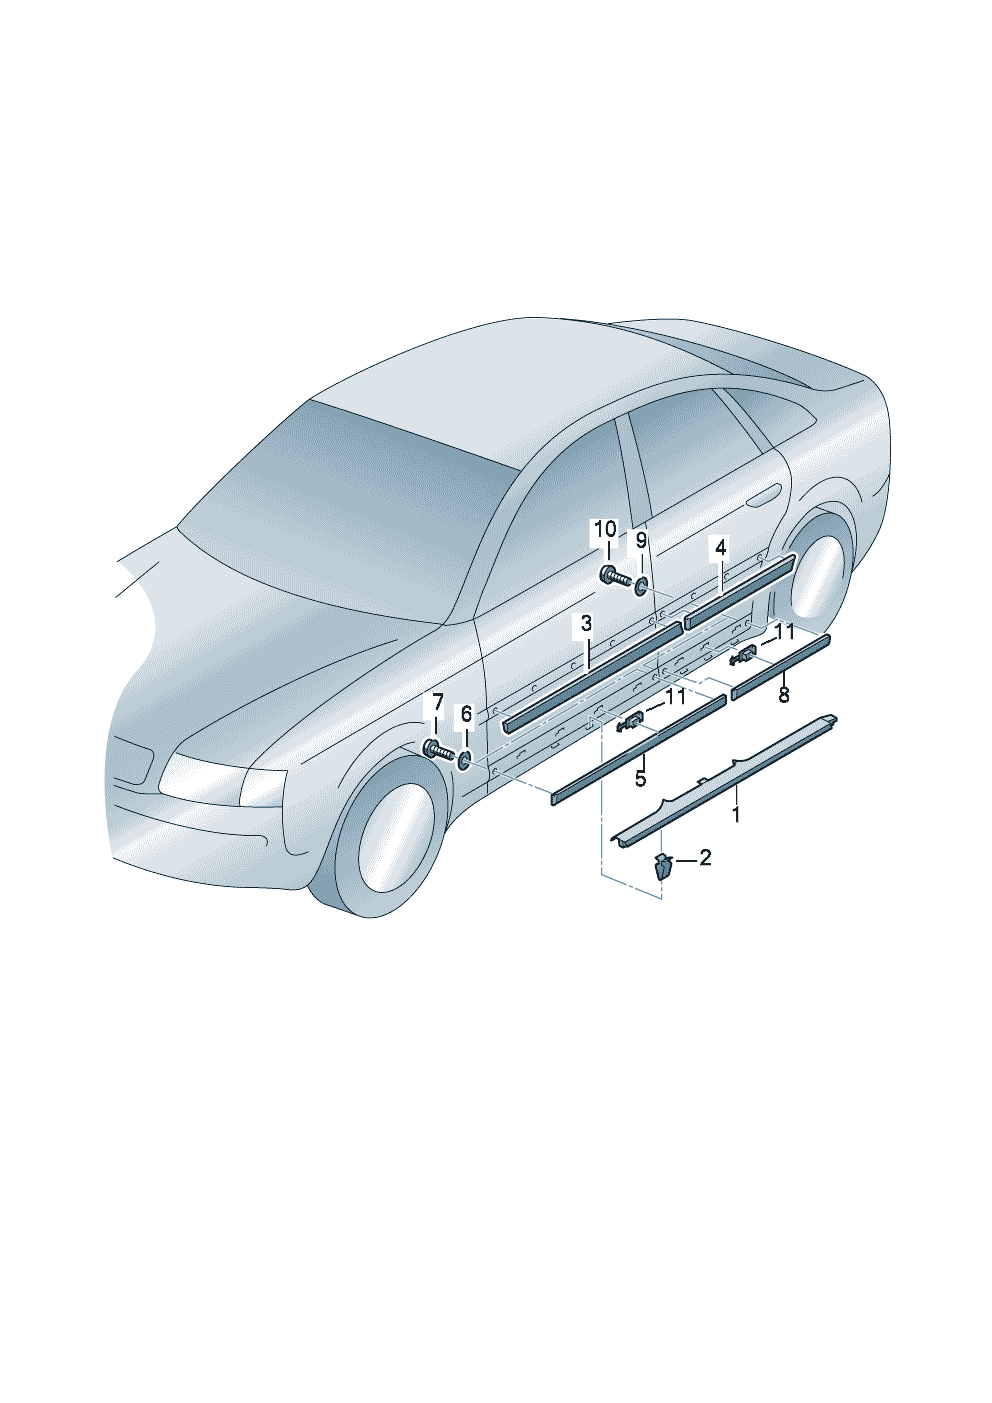 EinstiegsleisteSchutzleisten innenaussen - Audi A6/Avant - a6